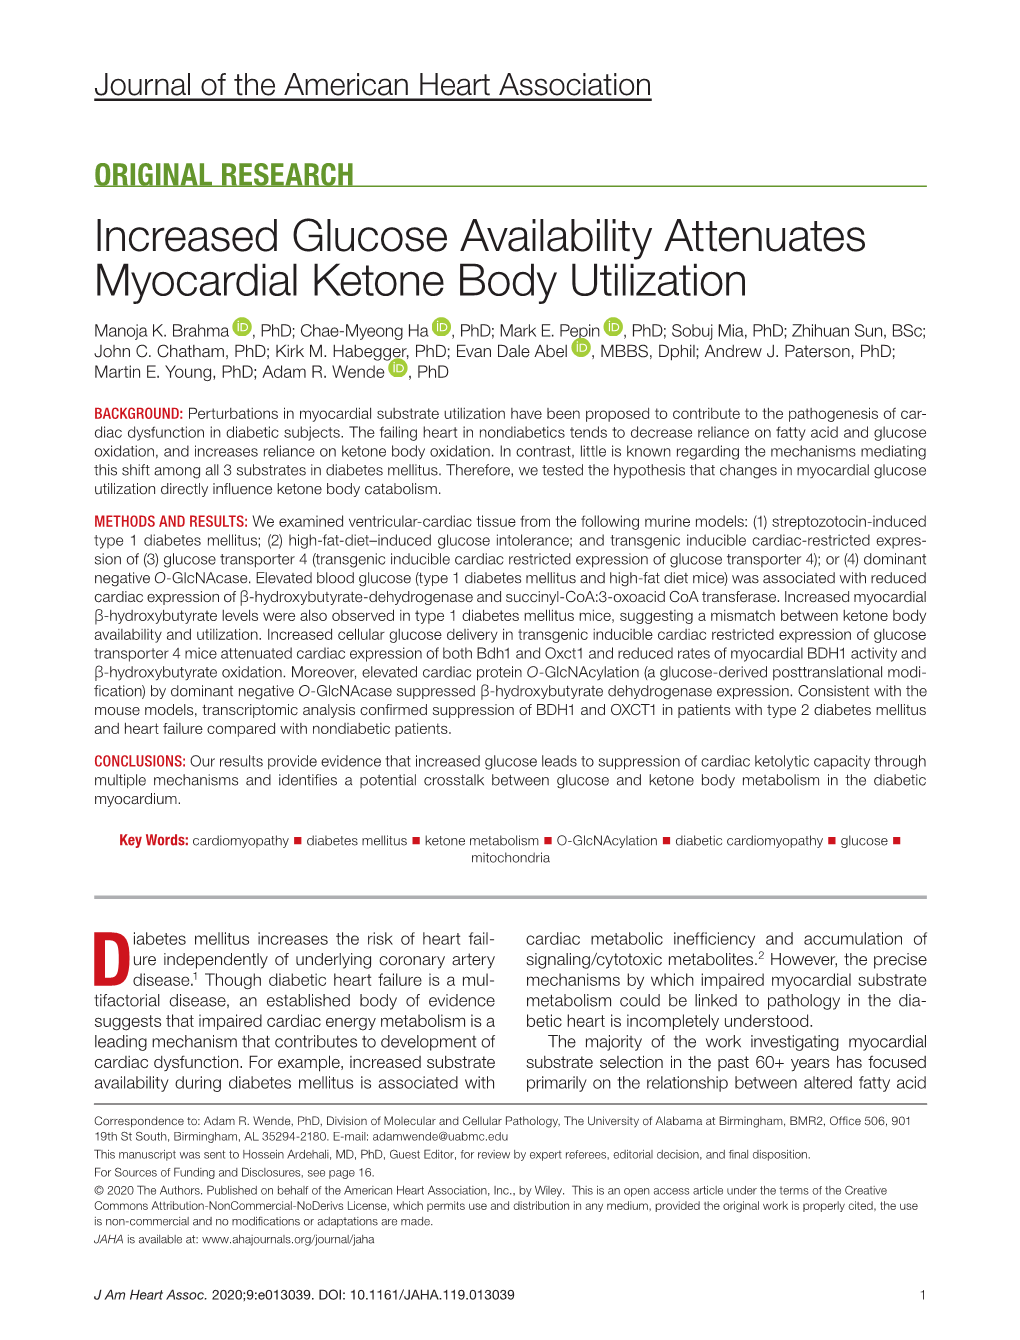 Increased Glucose Availability Attenuates Myocardial Ketone Body Utilization